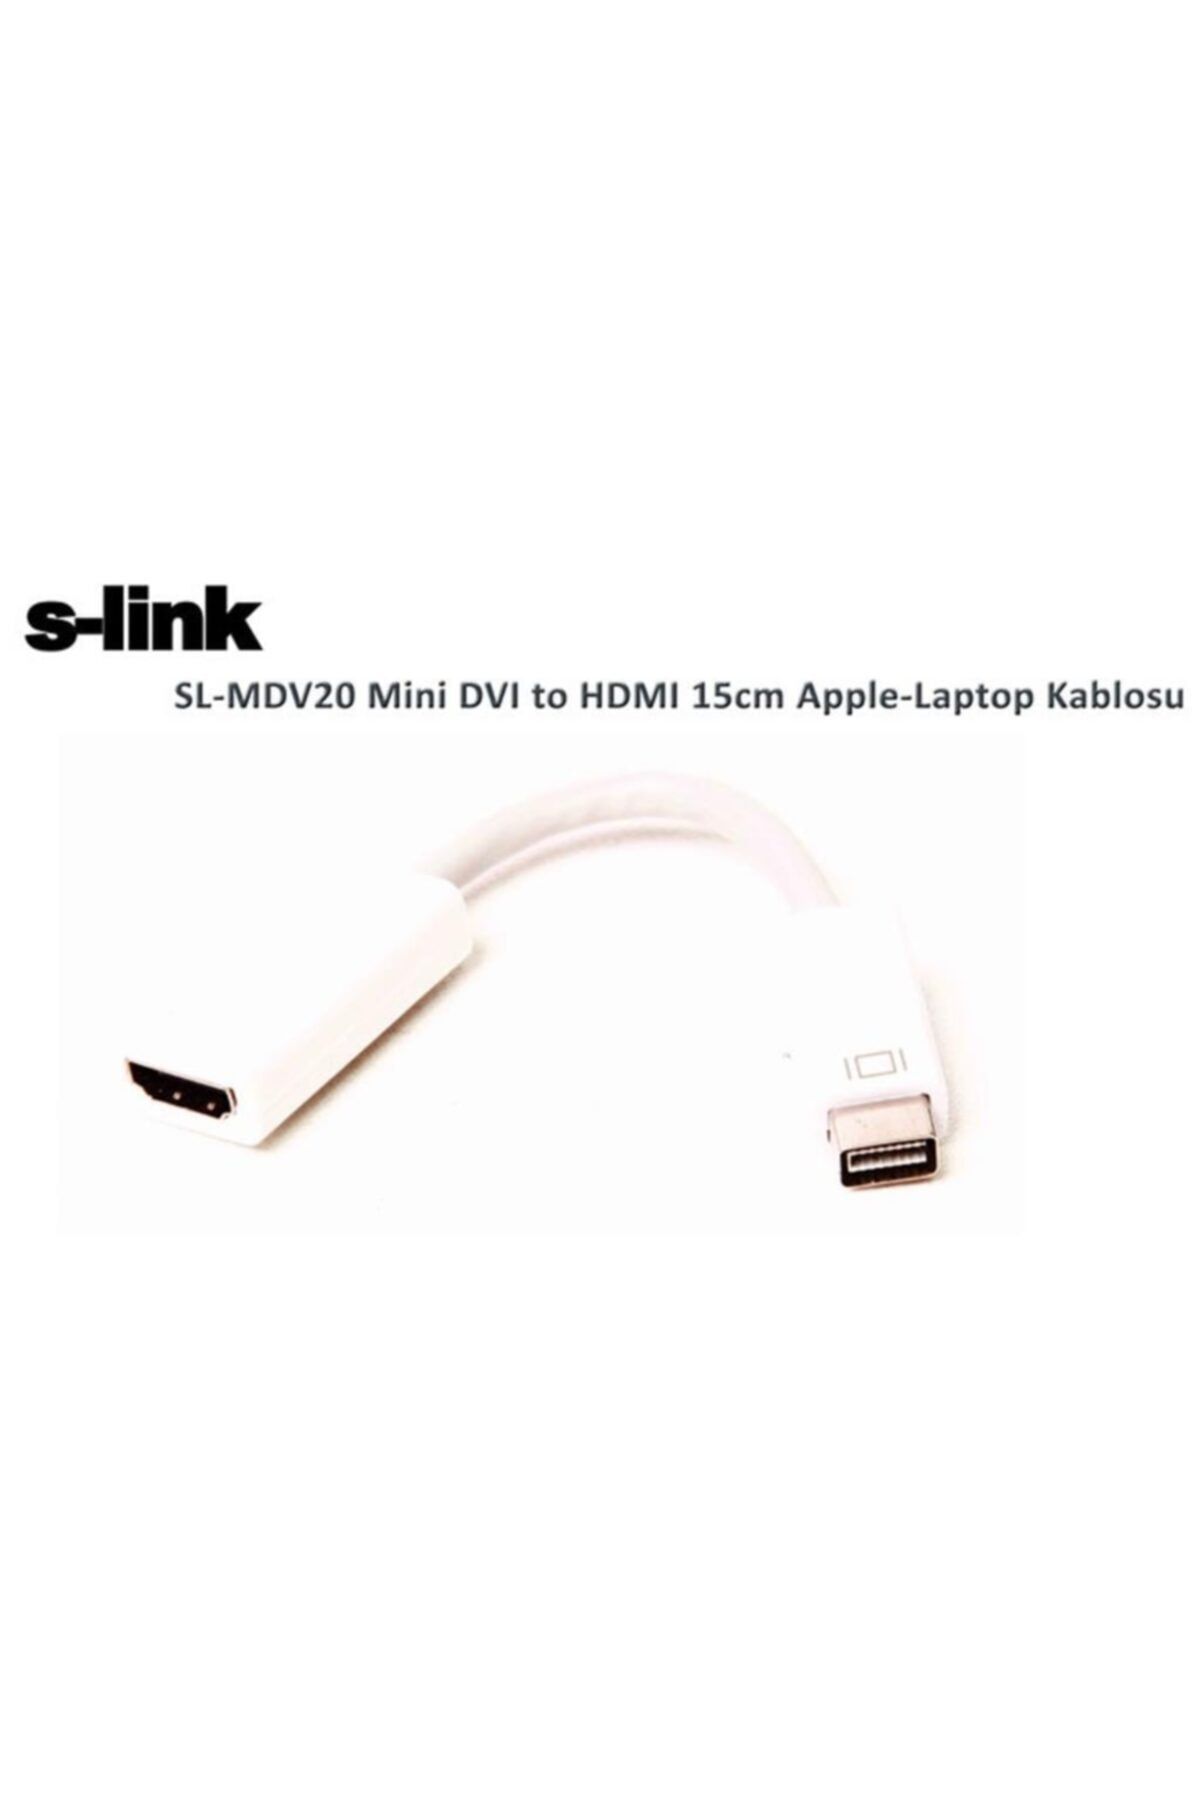 S-Link Mini Dvı To Hdmı 15cm Apple Laptop Kablosu Sl-mdv20